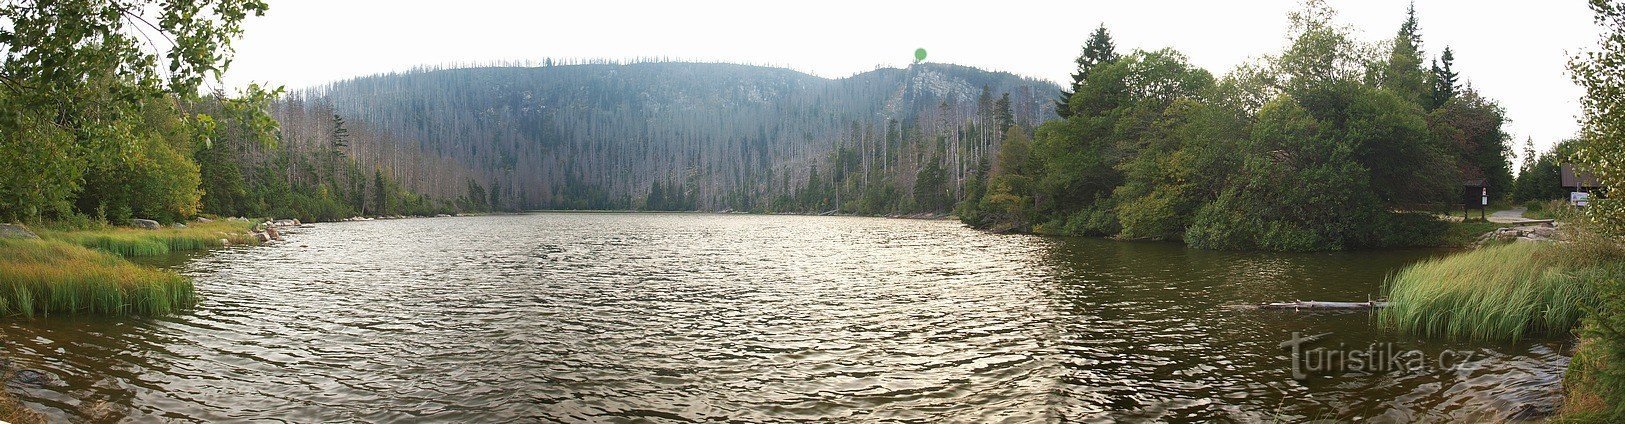 Plešasto jezero, vzeto iz jezu. Zelena pika prikazuje razgledišče s kamnitim obelom